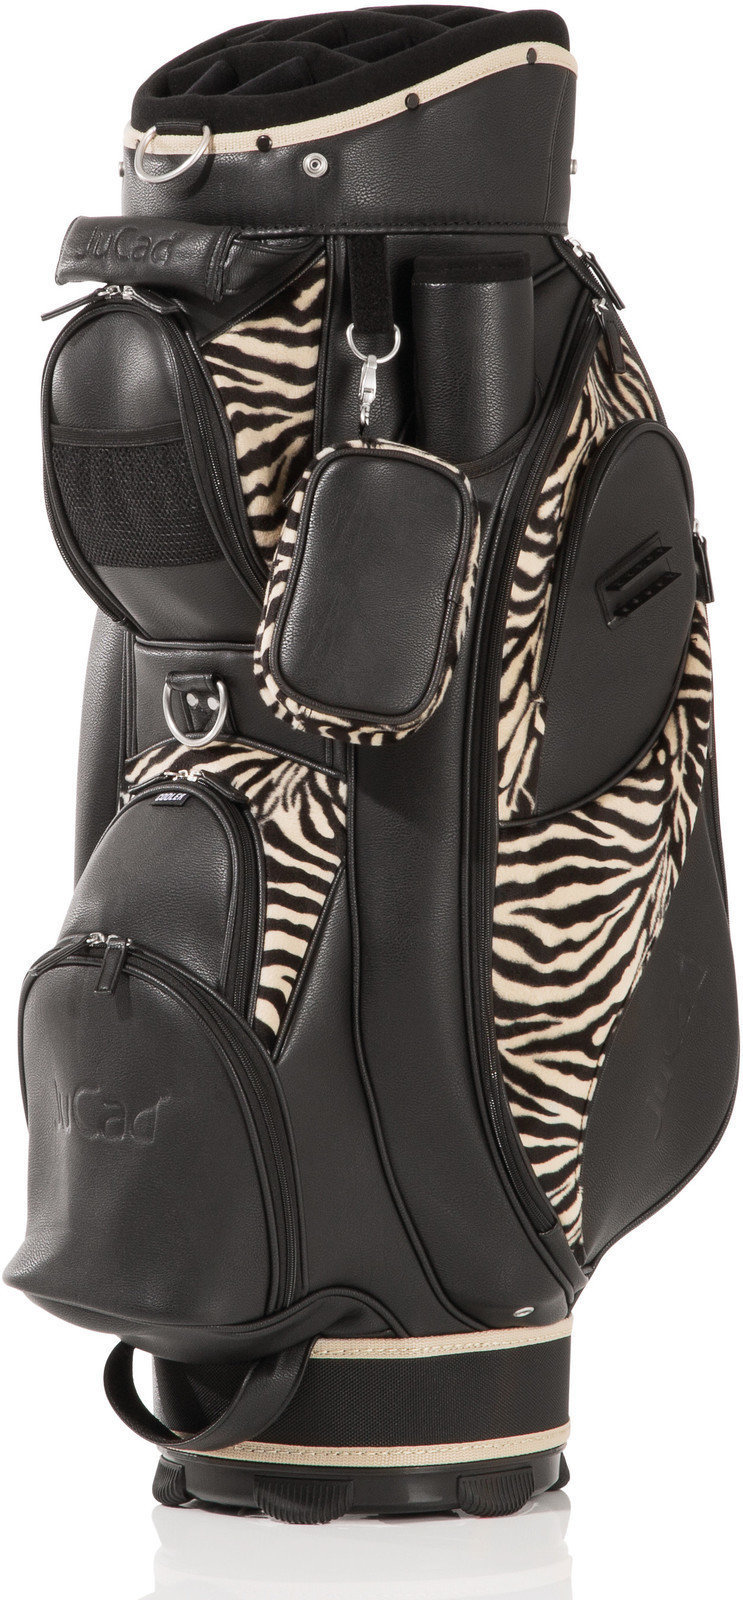 Geanta pentru golf Jucad Style Black/Zebra Cart Bag